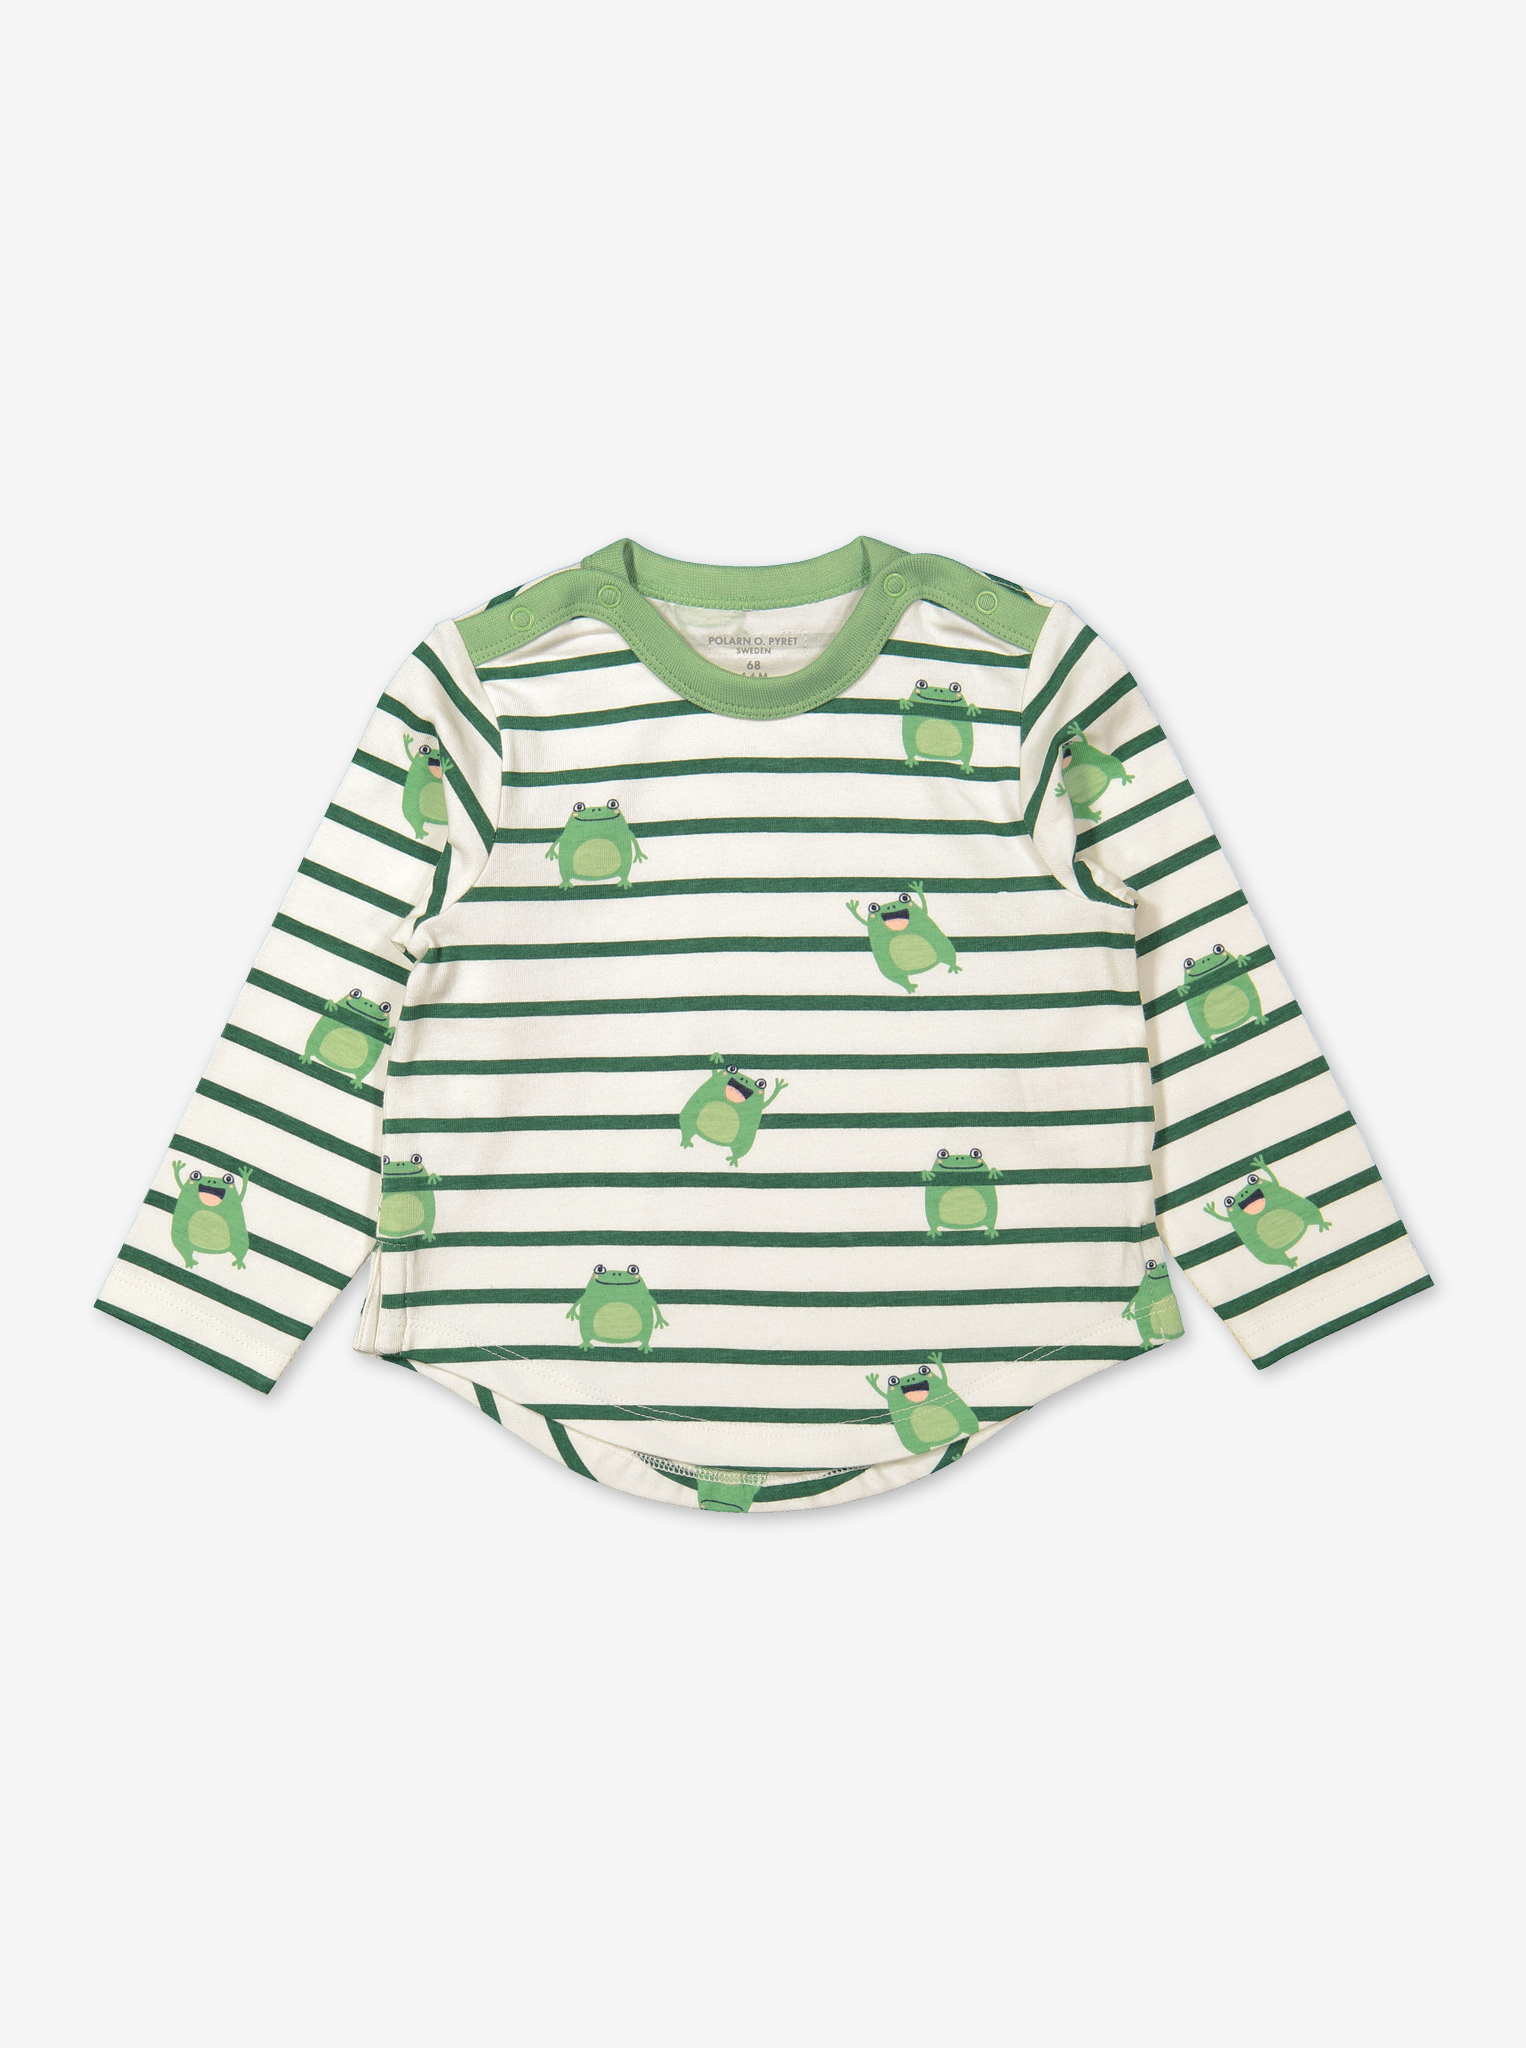 Stripes & Frog Print Baby Top